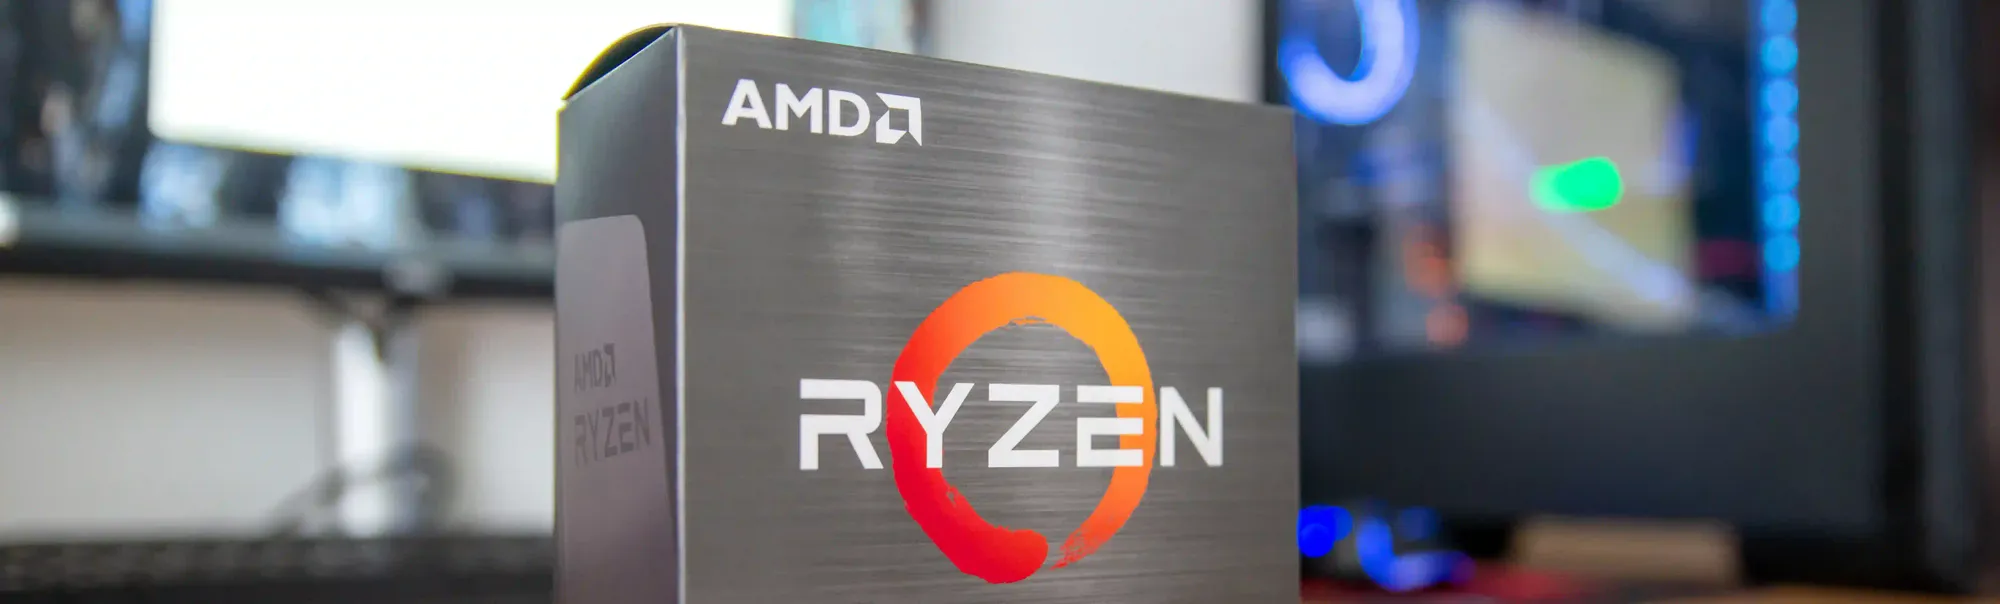 AMD Ryzen 9 5900X - Ficha Técnica